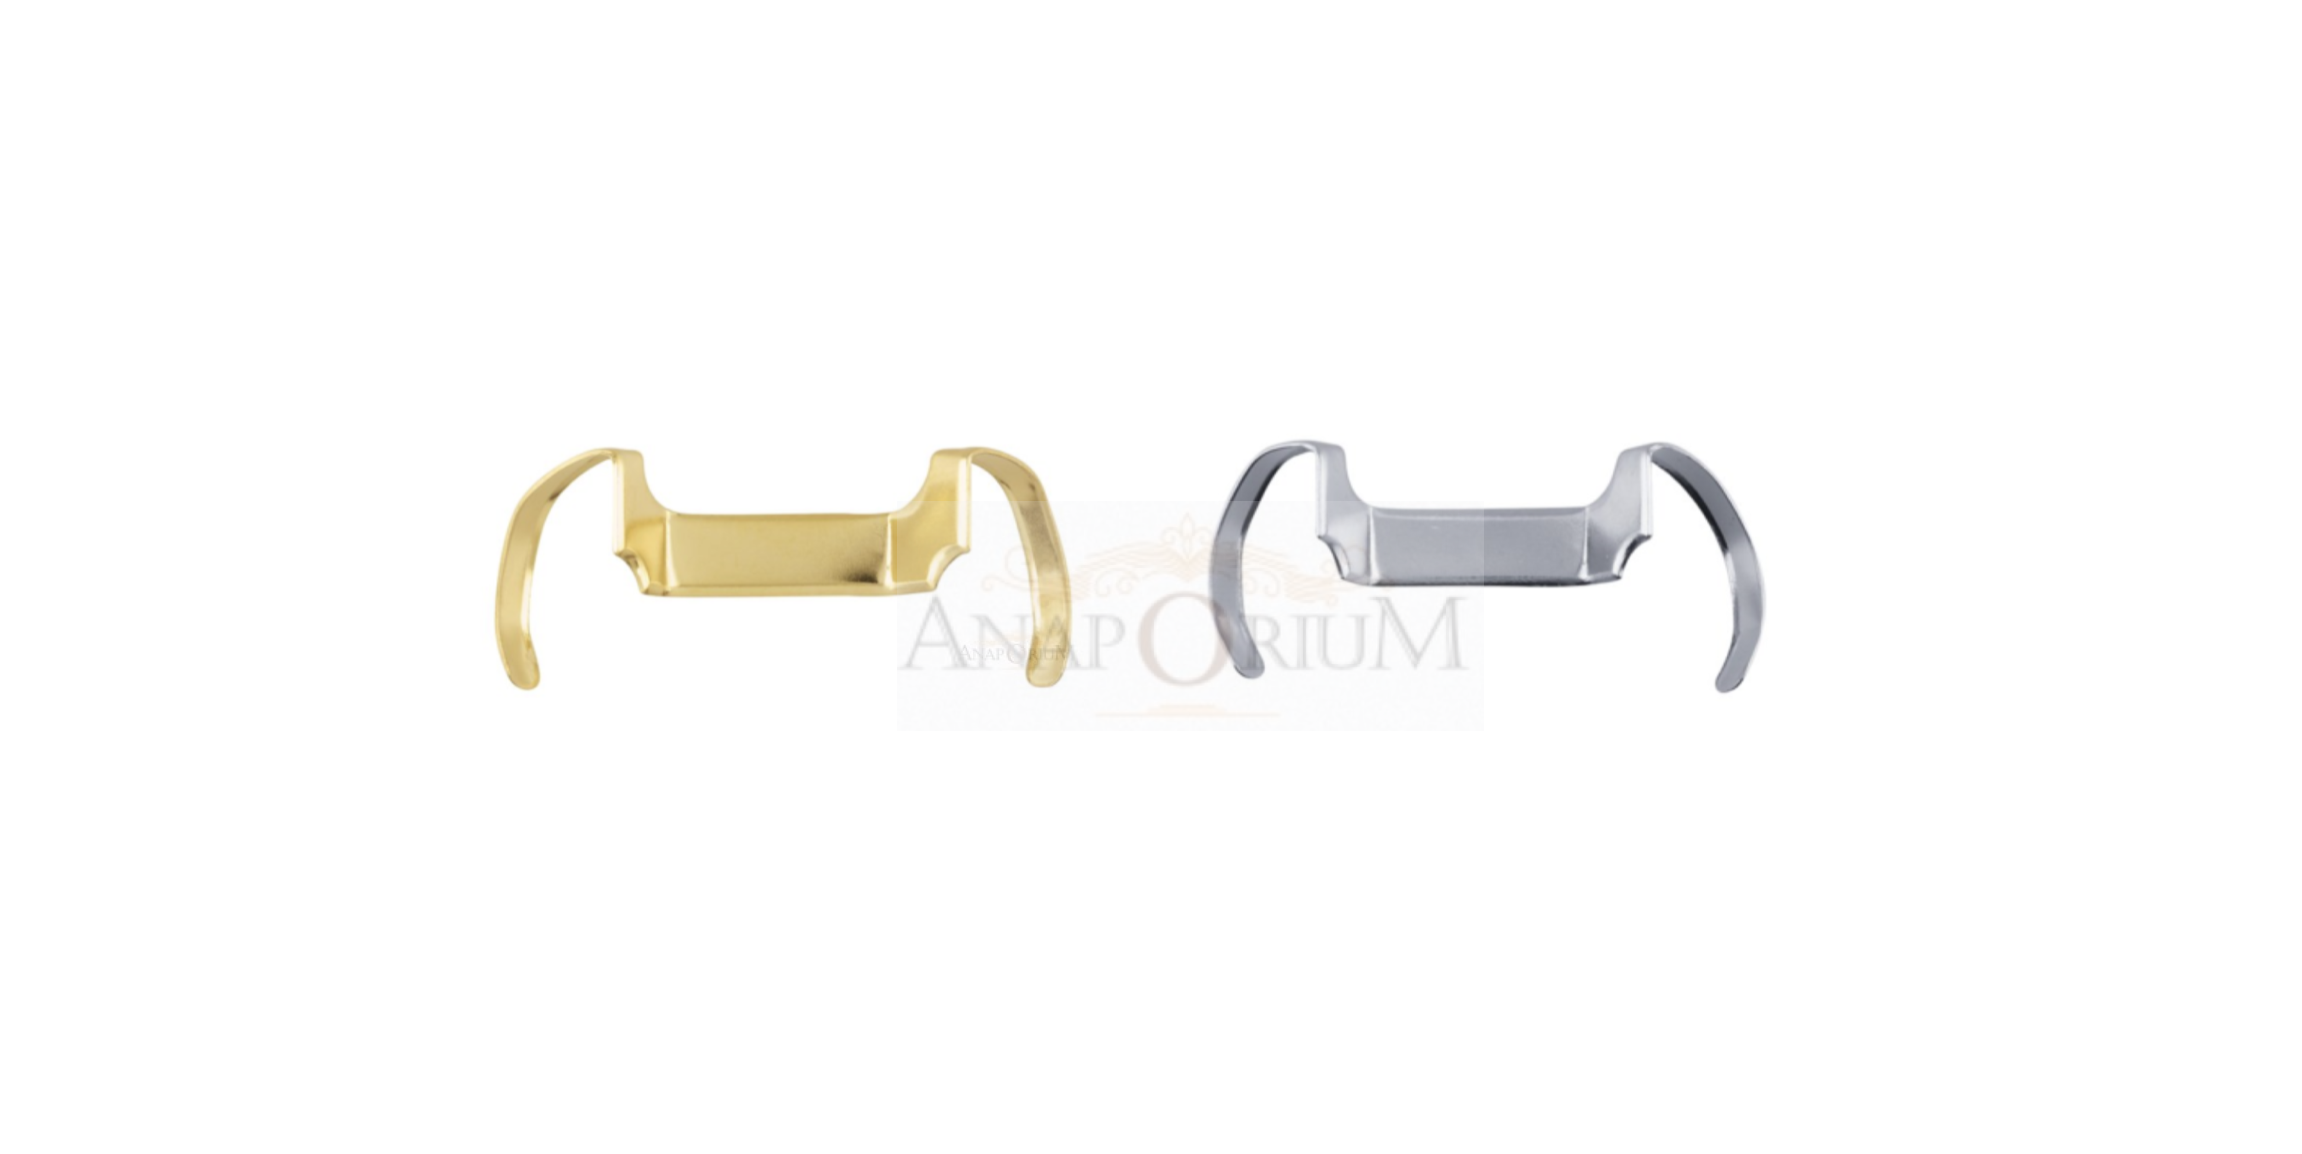 14kt White/Yellow Metal Ring Guard Adjuster Counter loc Small Medium Large  (Set of Three)